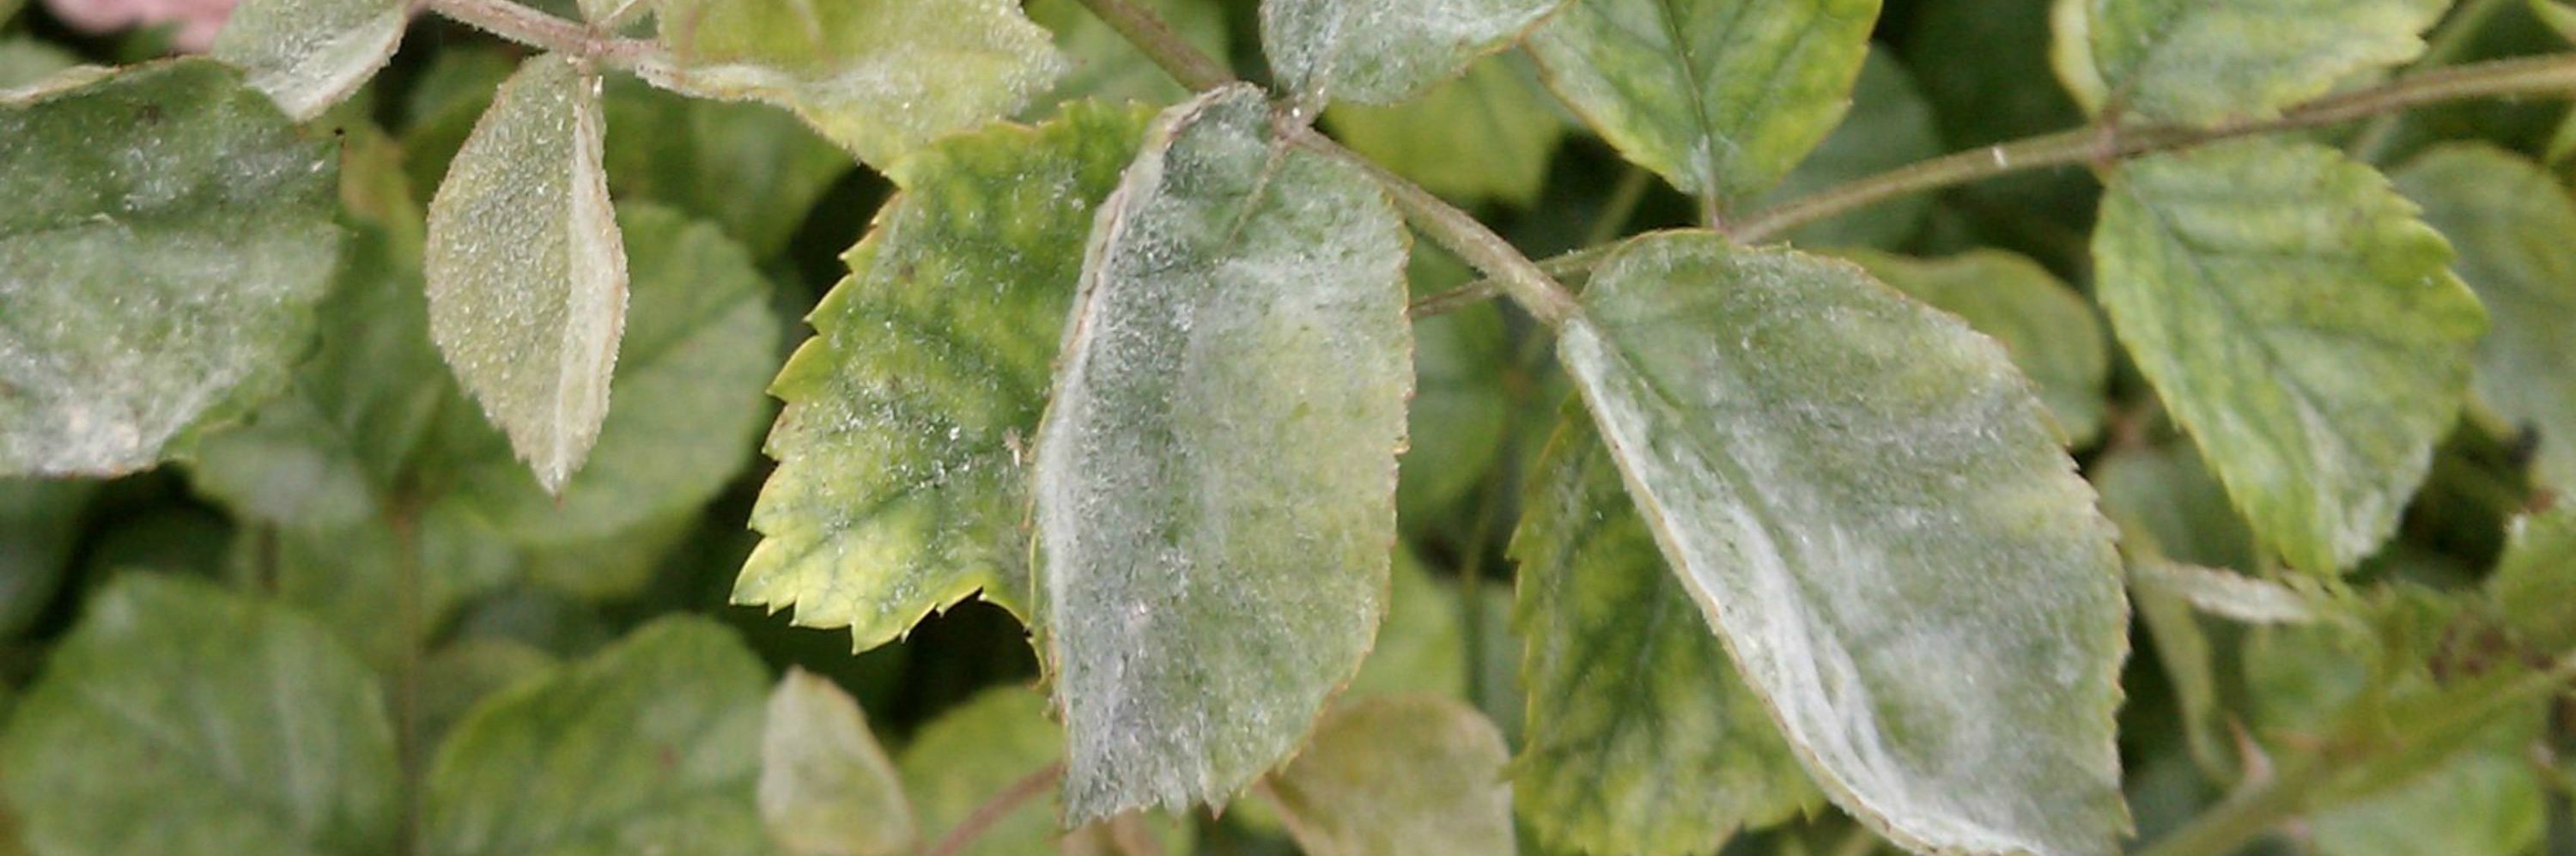 Powdery mildew disease on a rose leaf, Anne of Green Gardens